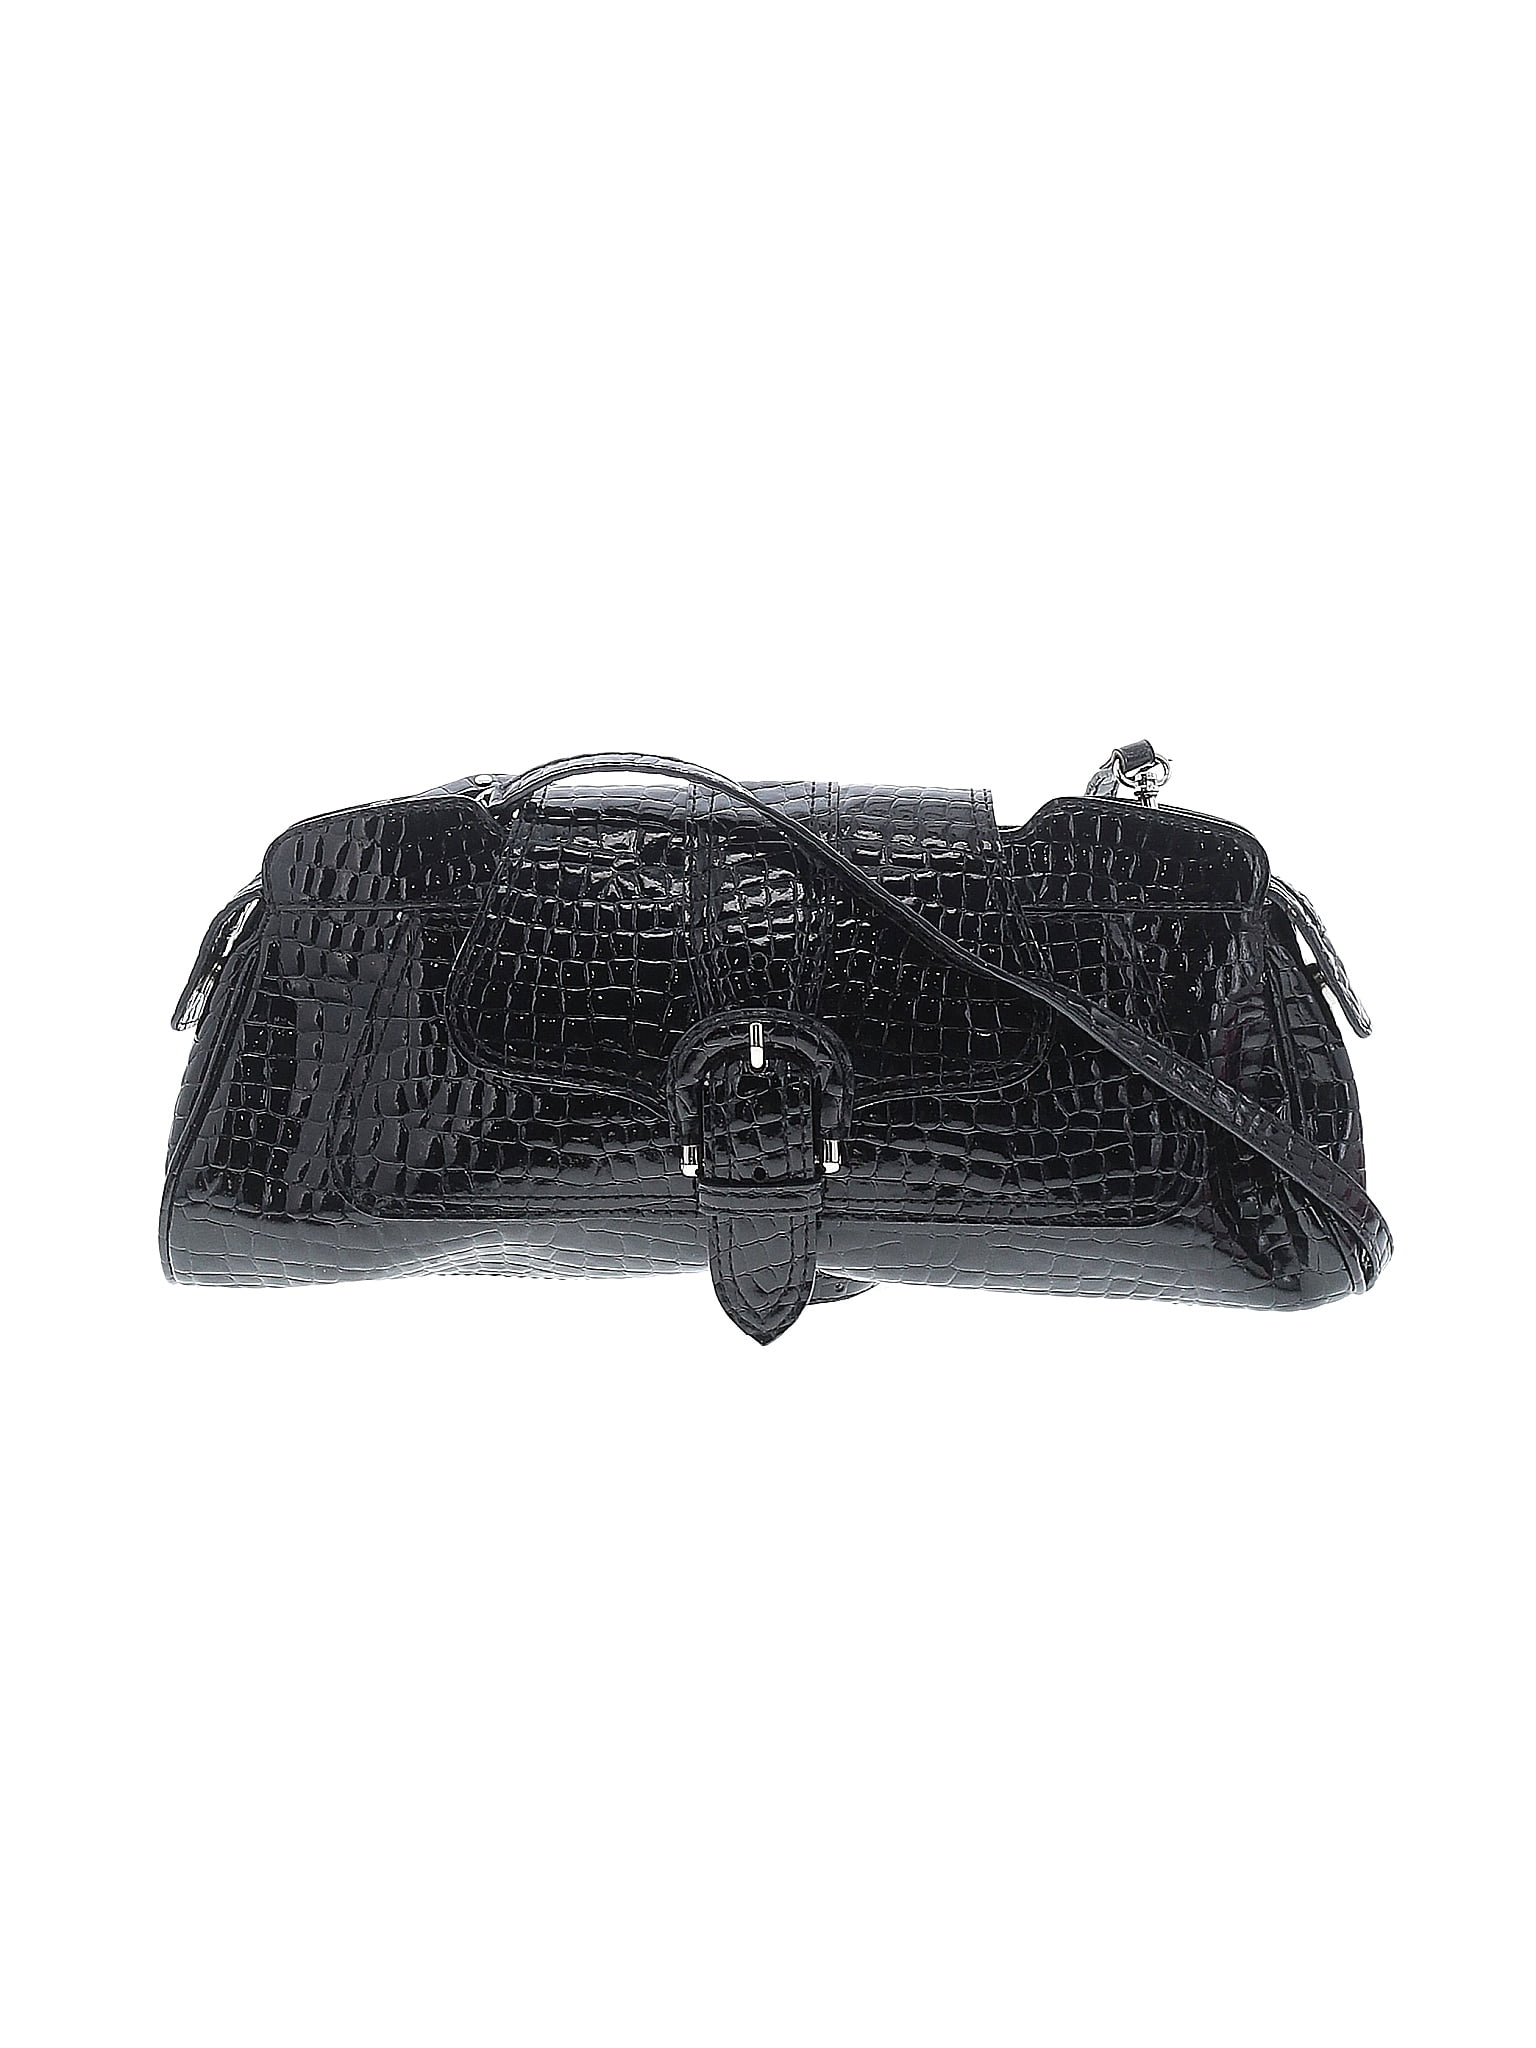 MAXX New York 100% Pvc Solid Black Crossbody Bag One Size - 84% off ...